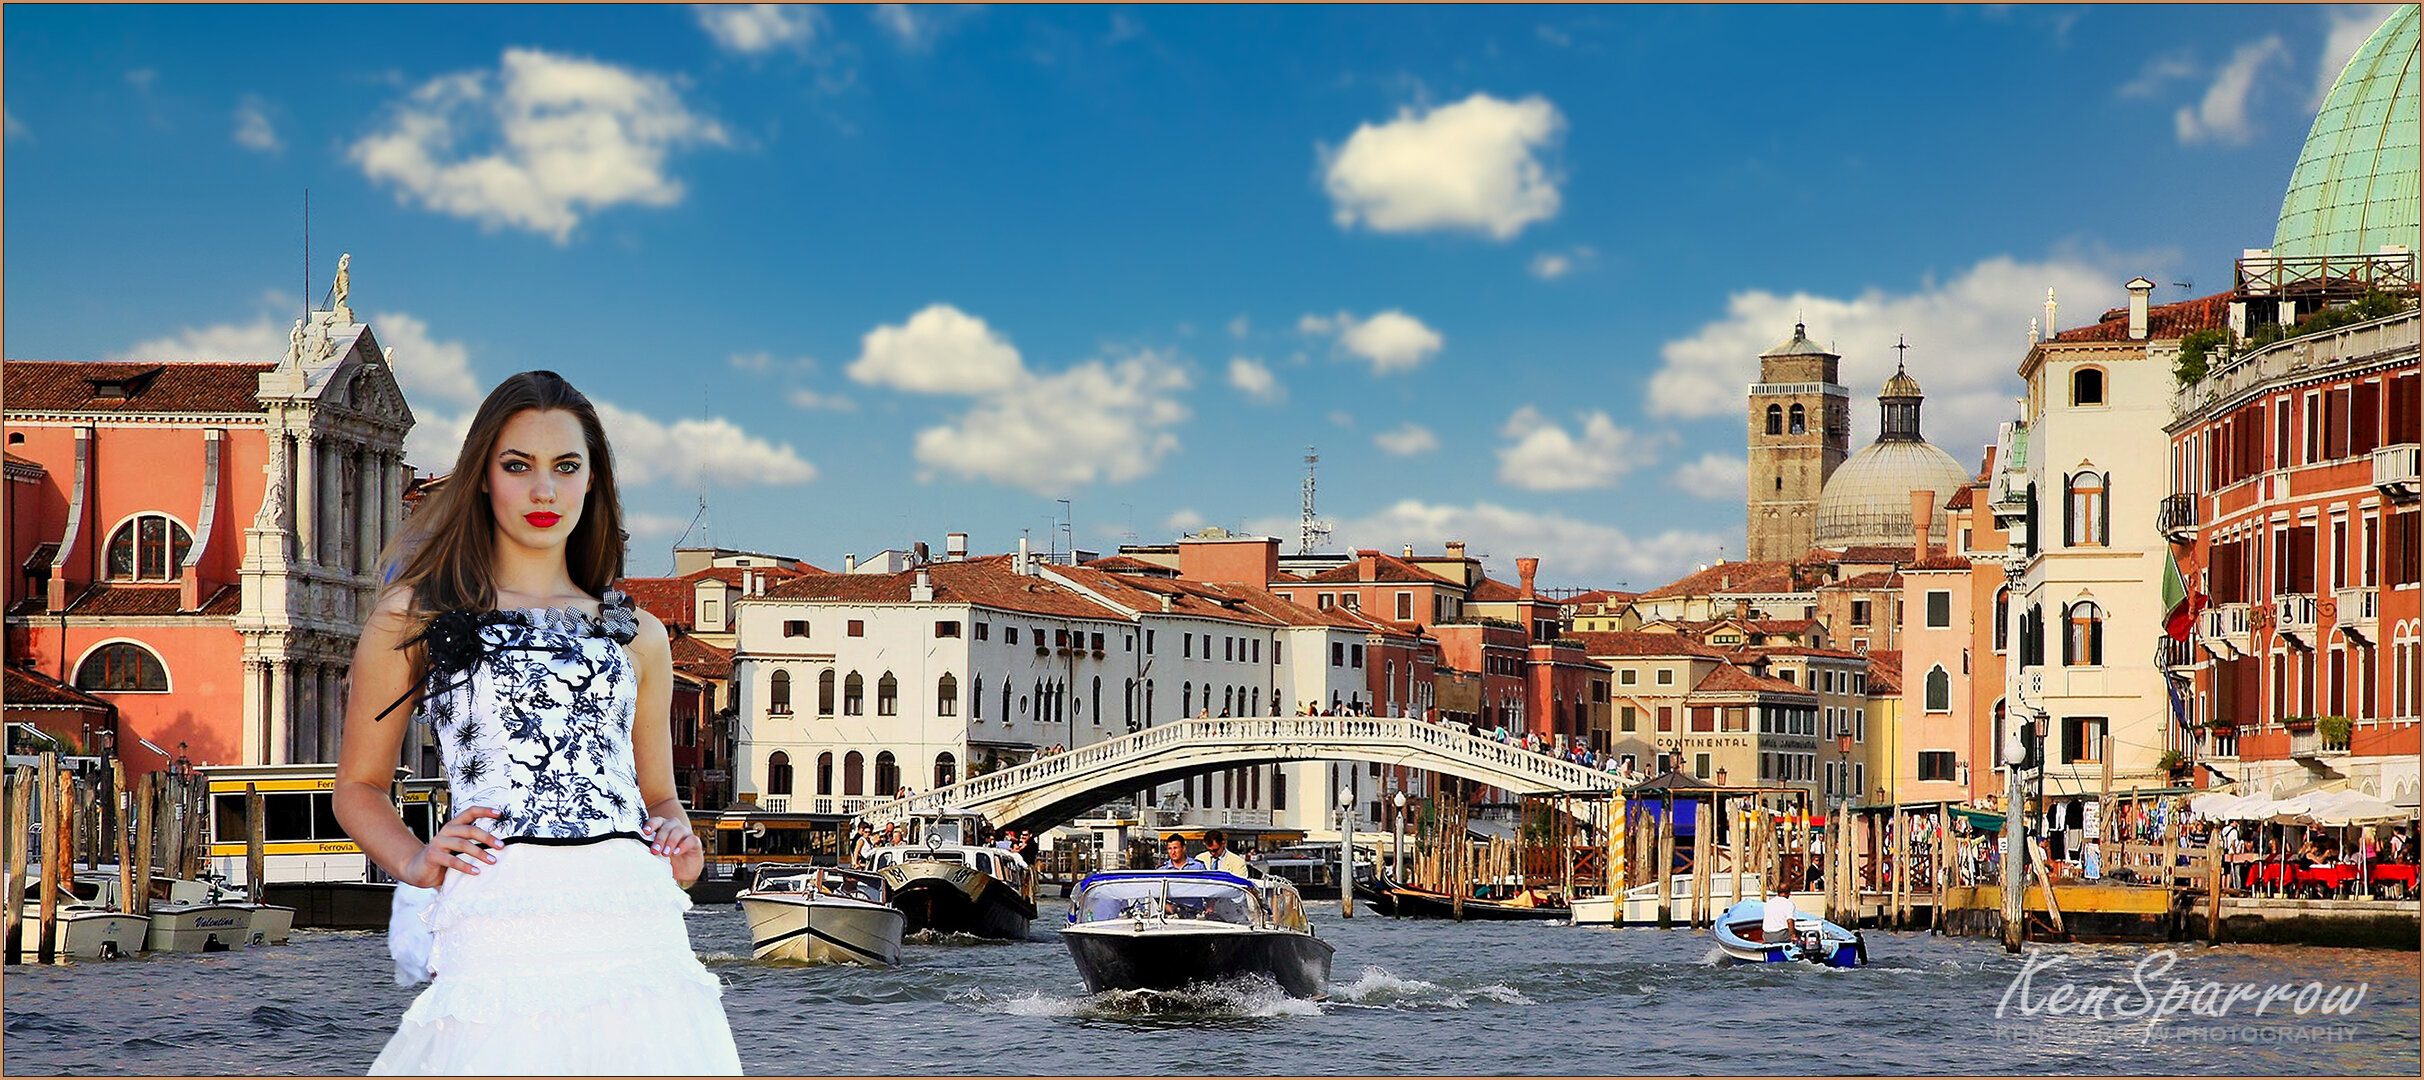 353 - 354  Kaiya on the Grand Canal in Venice